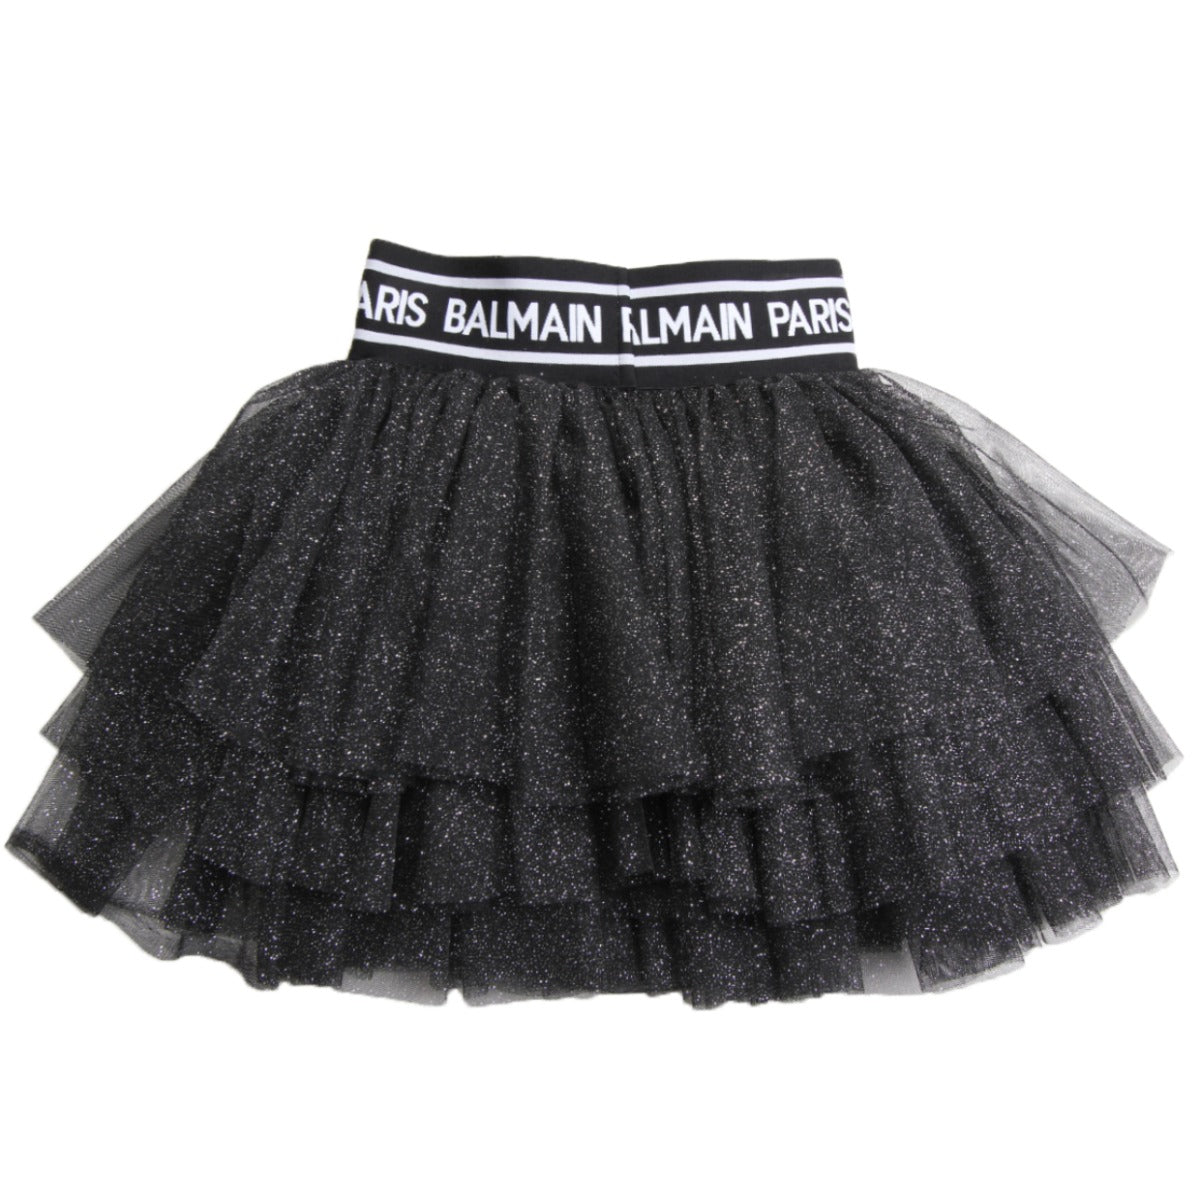 Balmain Paris Black Skirt